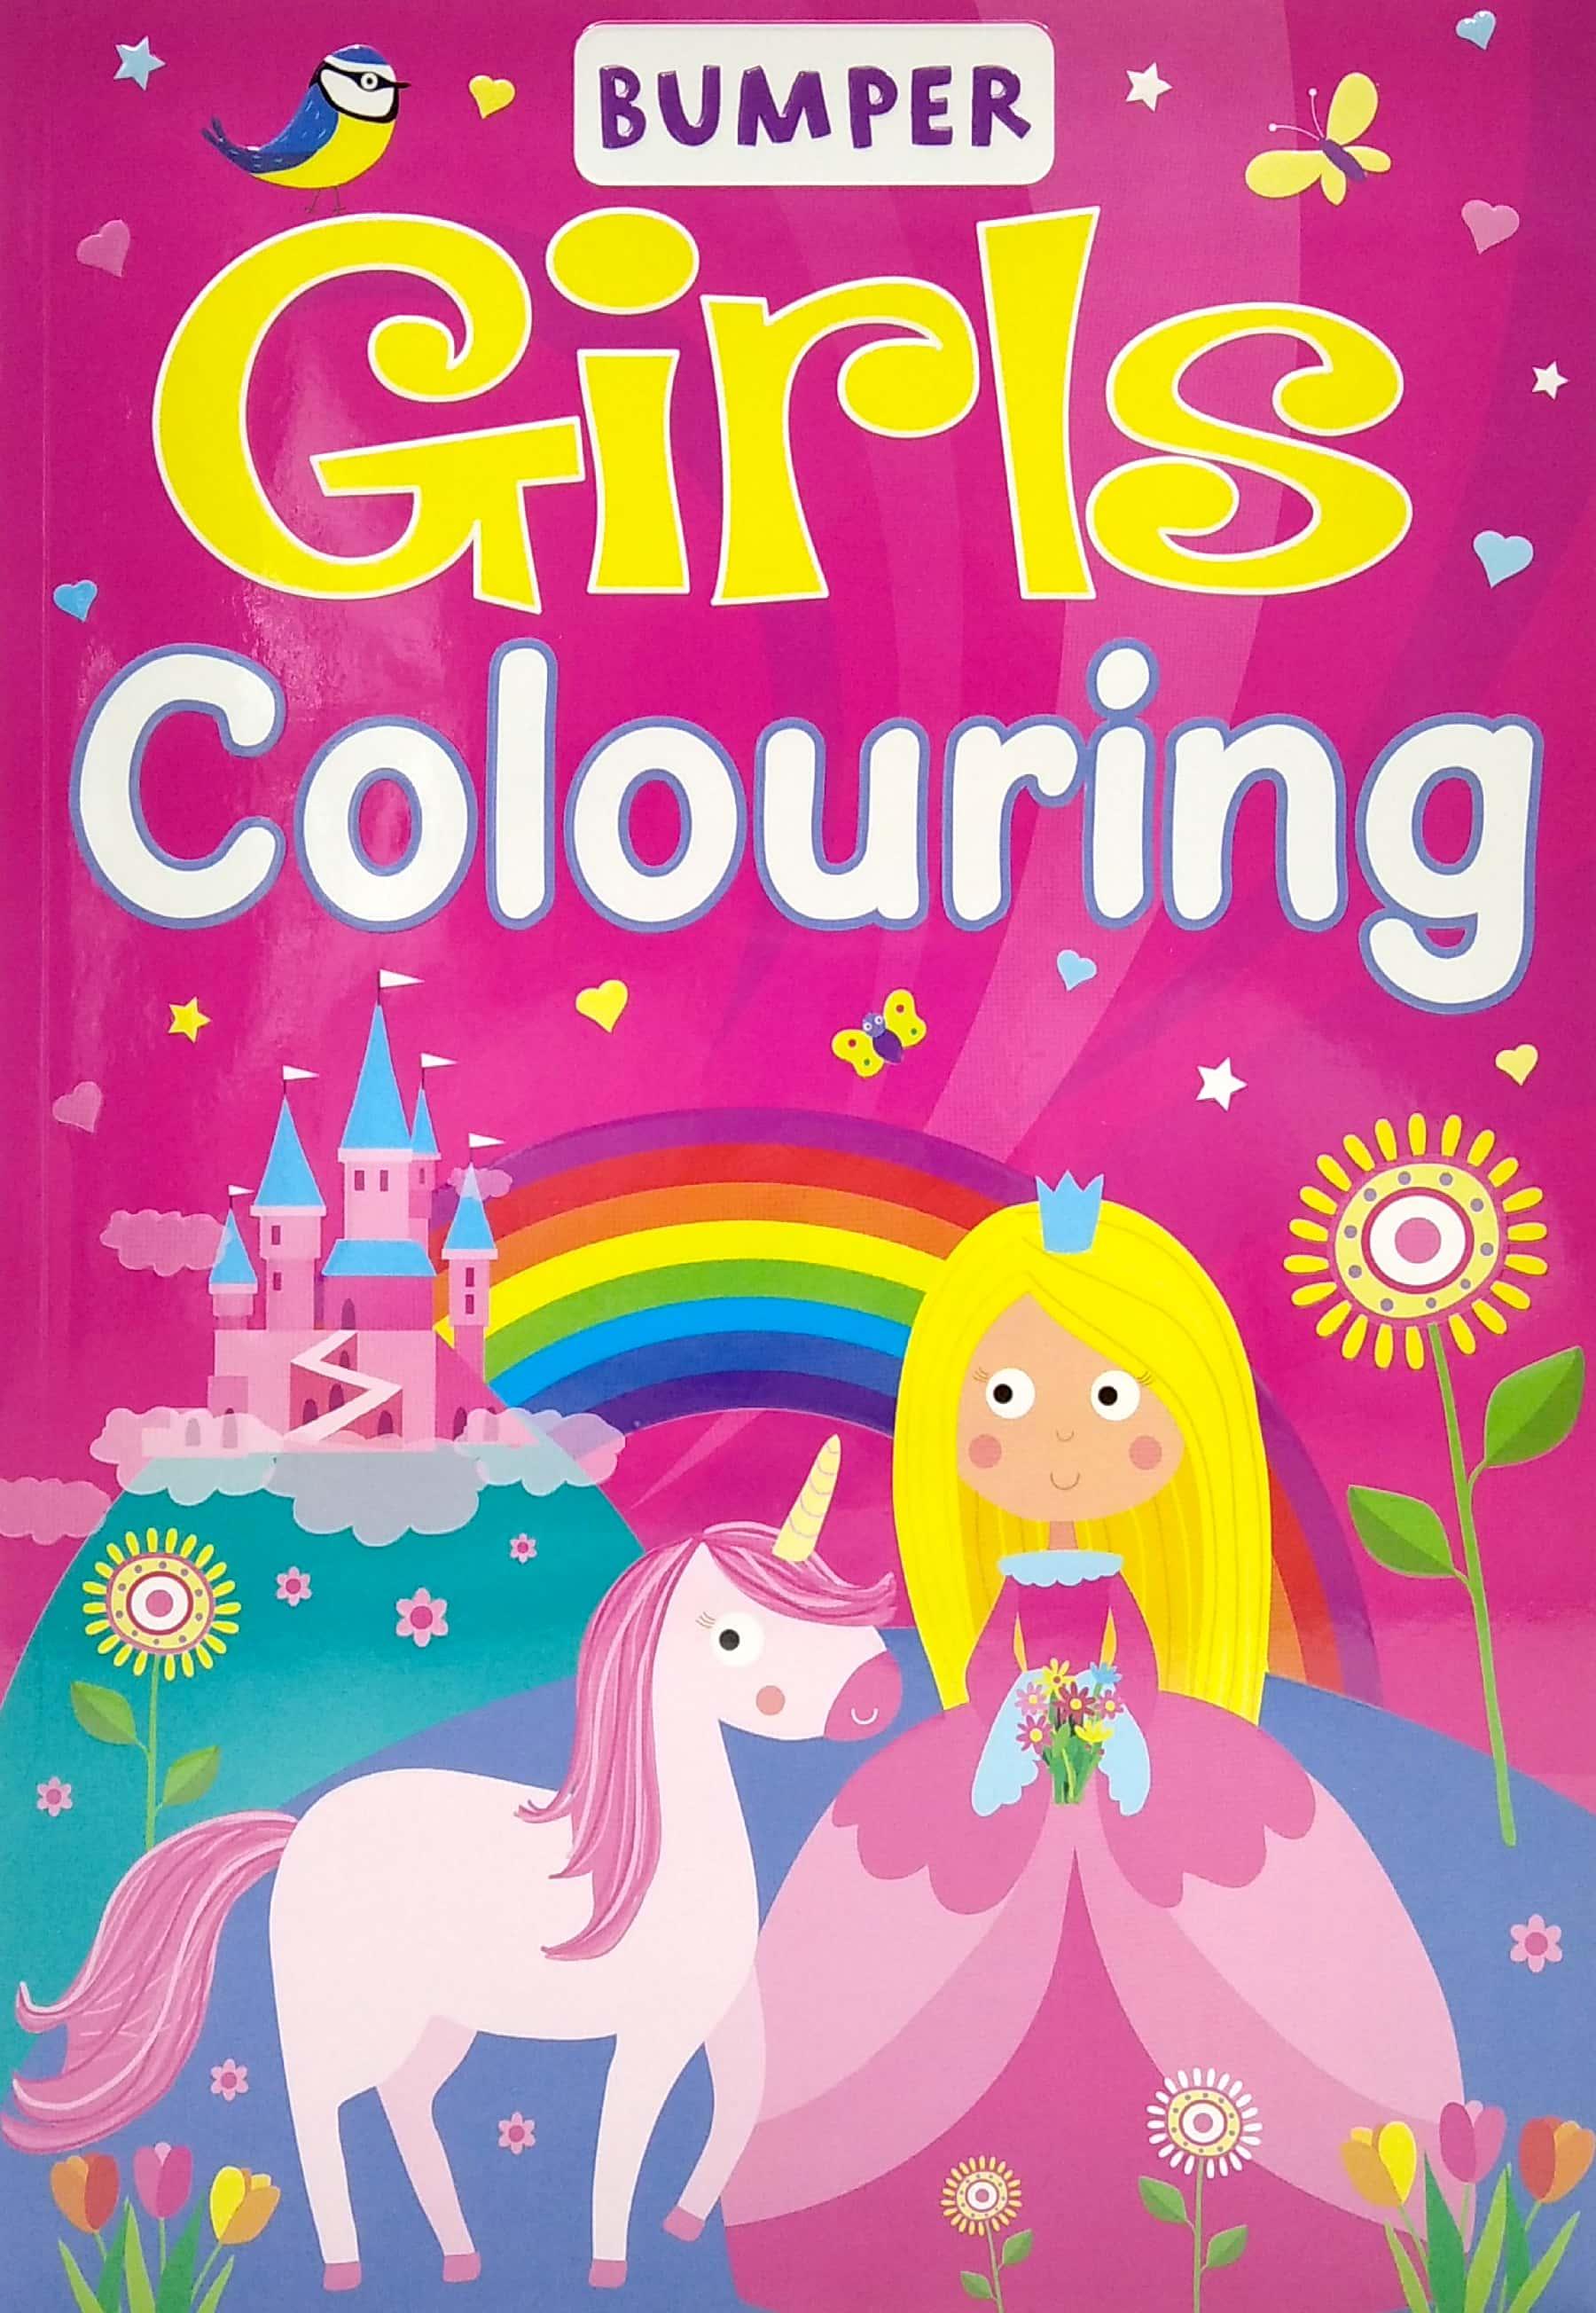 Bumper Girls Colouring